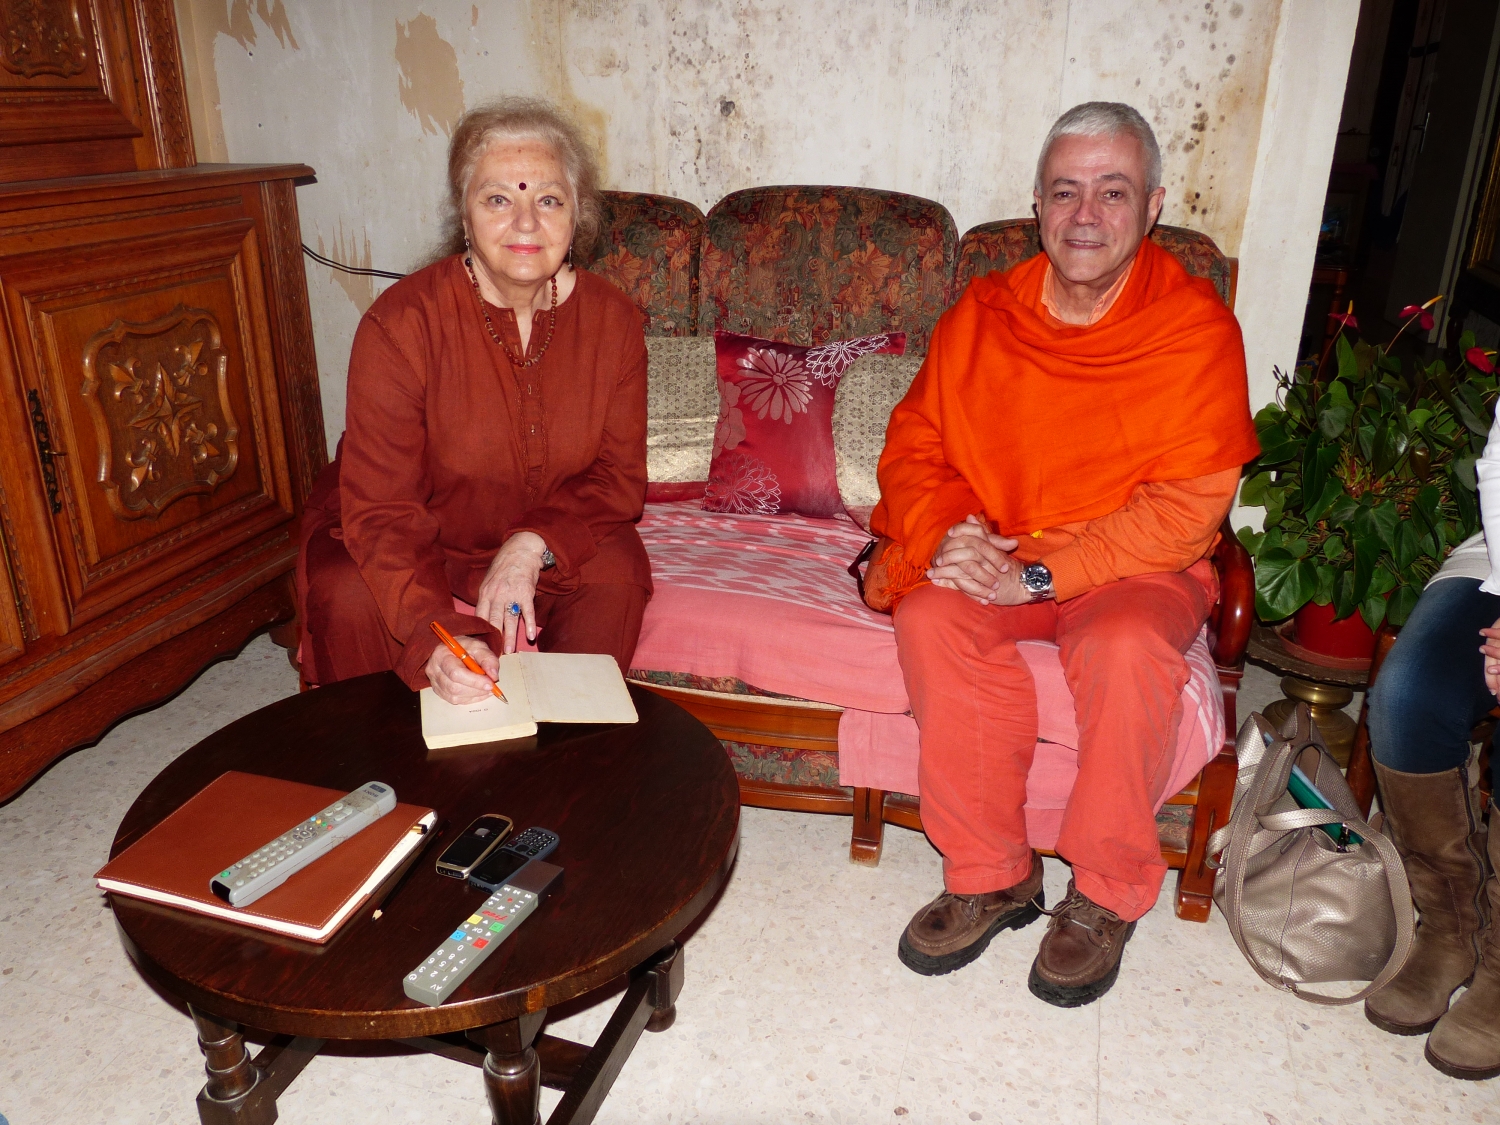 Encuentro de H.H. Jagat Guru Amrta Sūryānanda Mahā Rāja con Tara Michaël - Arles, Provenza - 2013, mayo